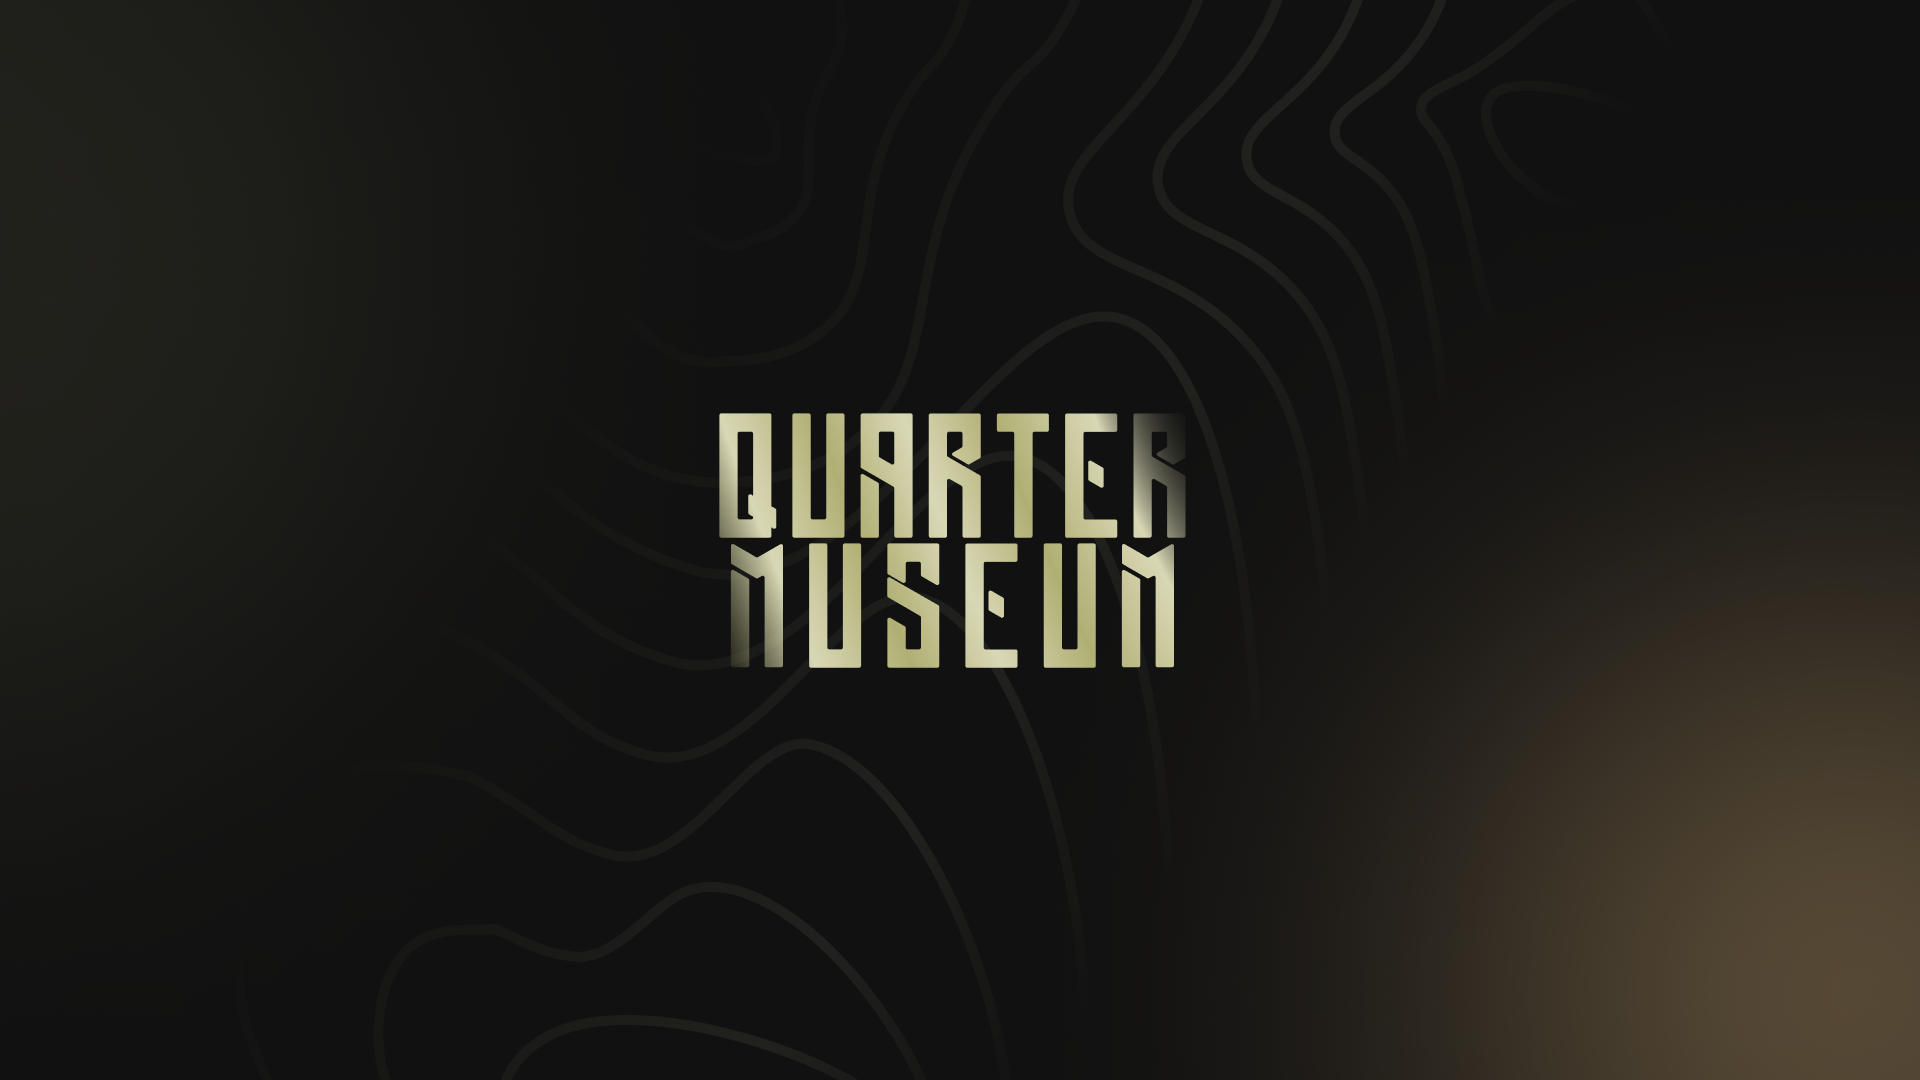 Quarter Museum project